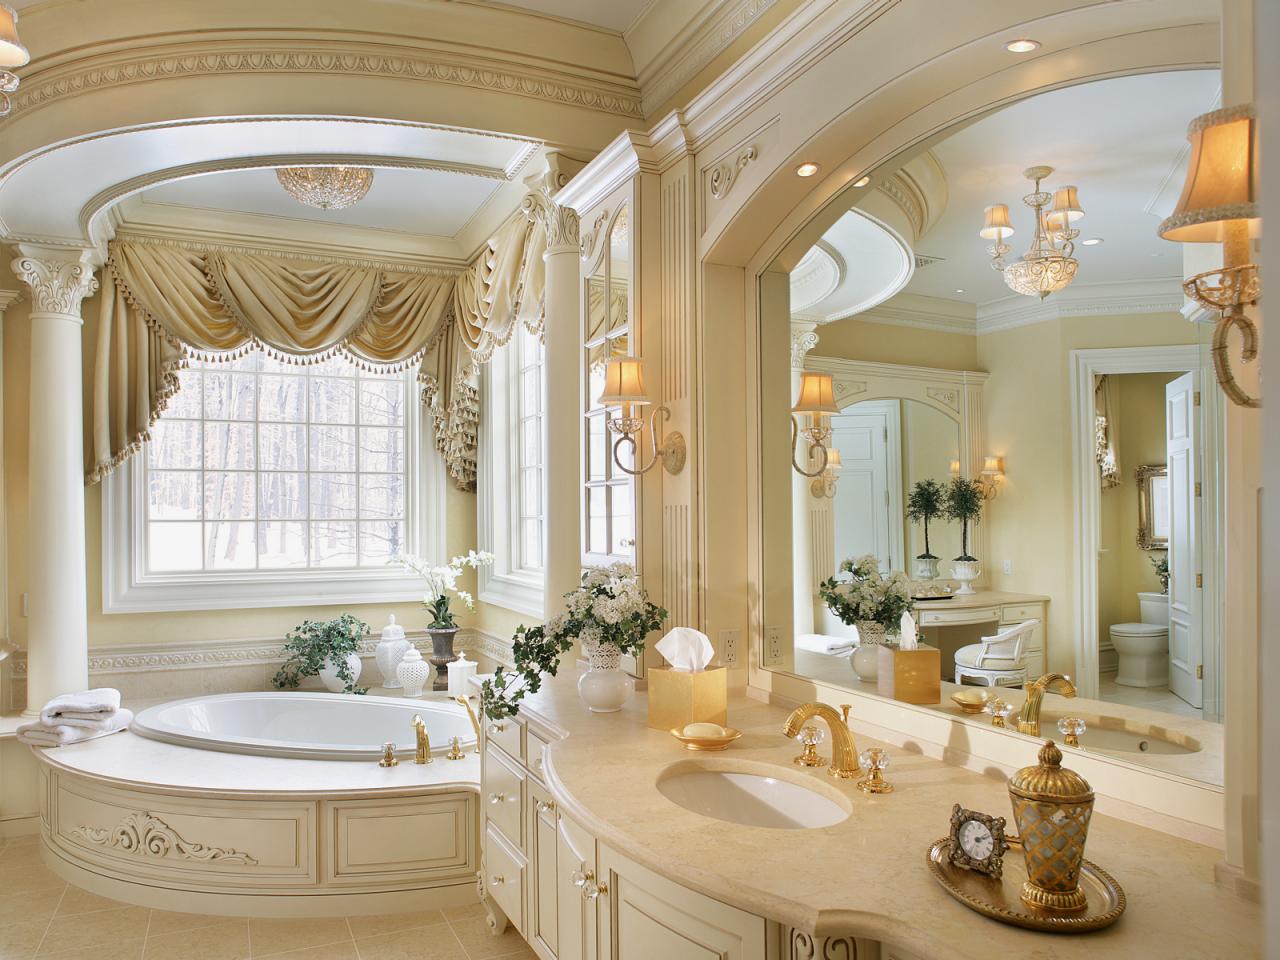 Master Bathroom With Romantic Style